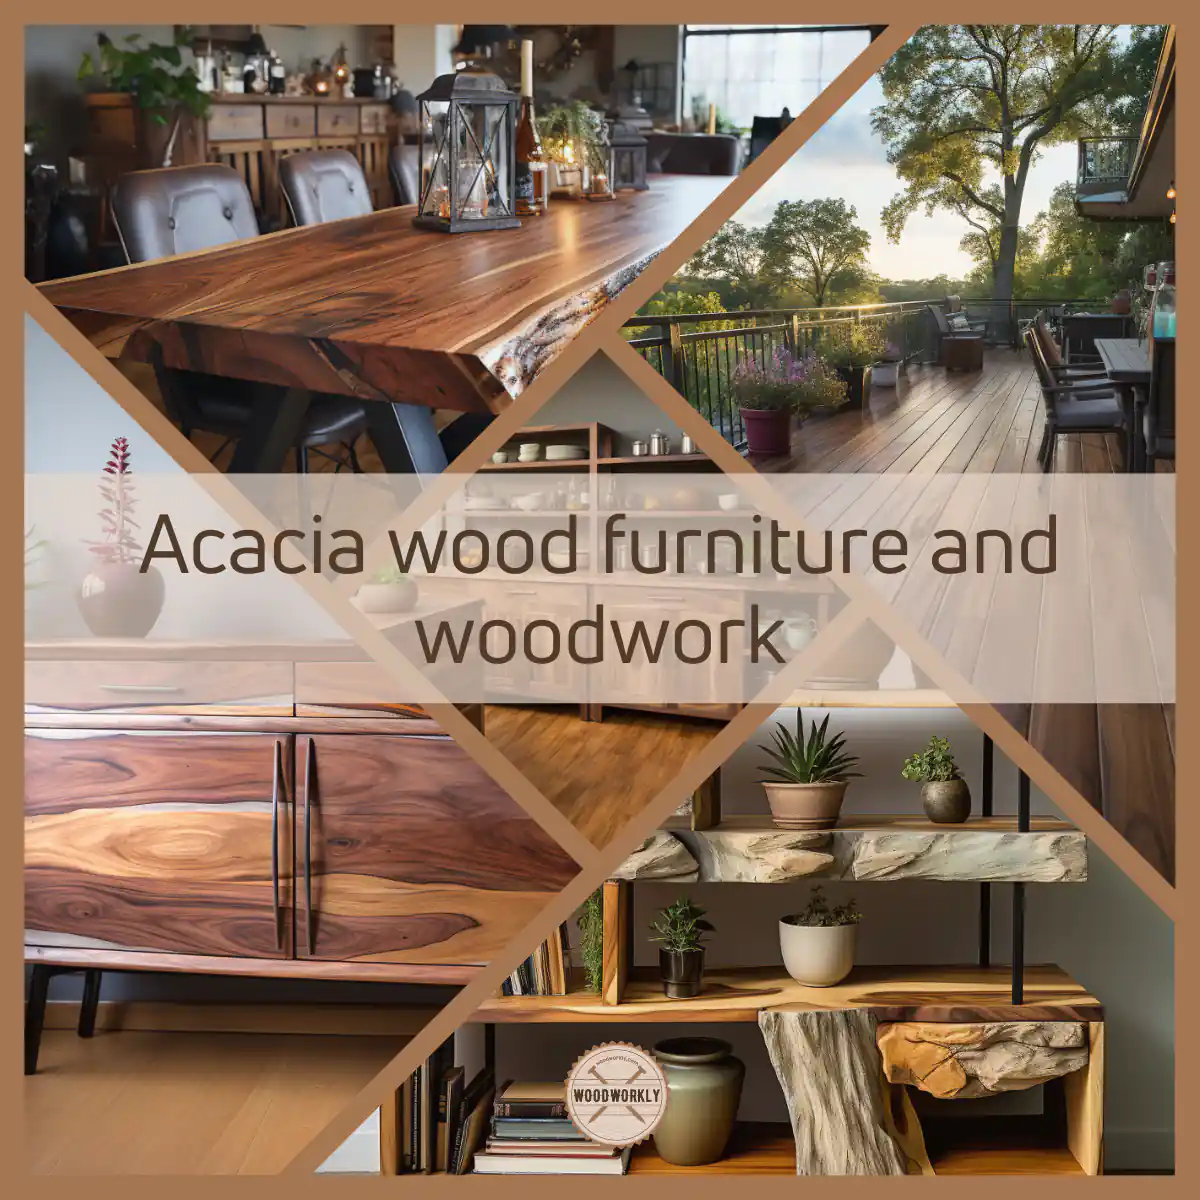 Acacia wood furniture and woodwork